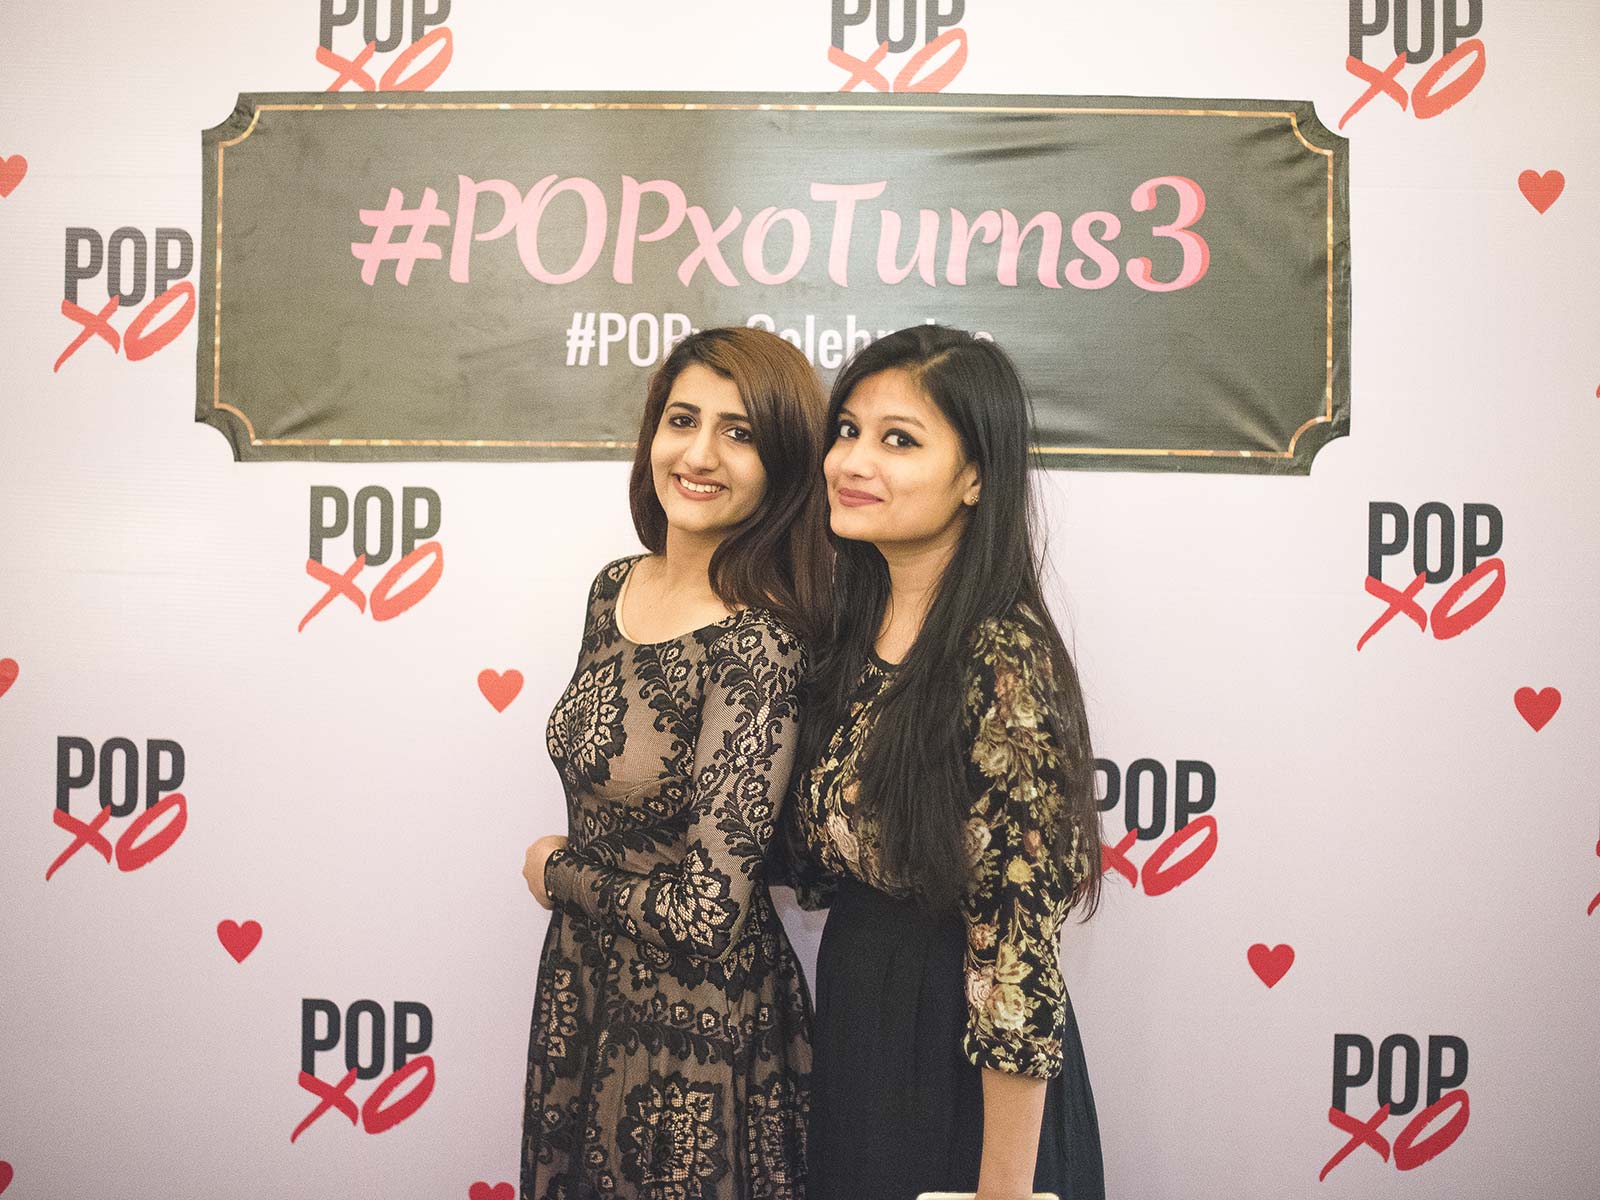 Aditi Bhardwaj and Manuja Seth at the #POPxoTurns3 party